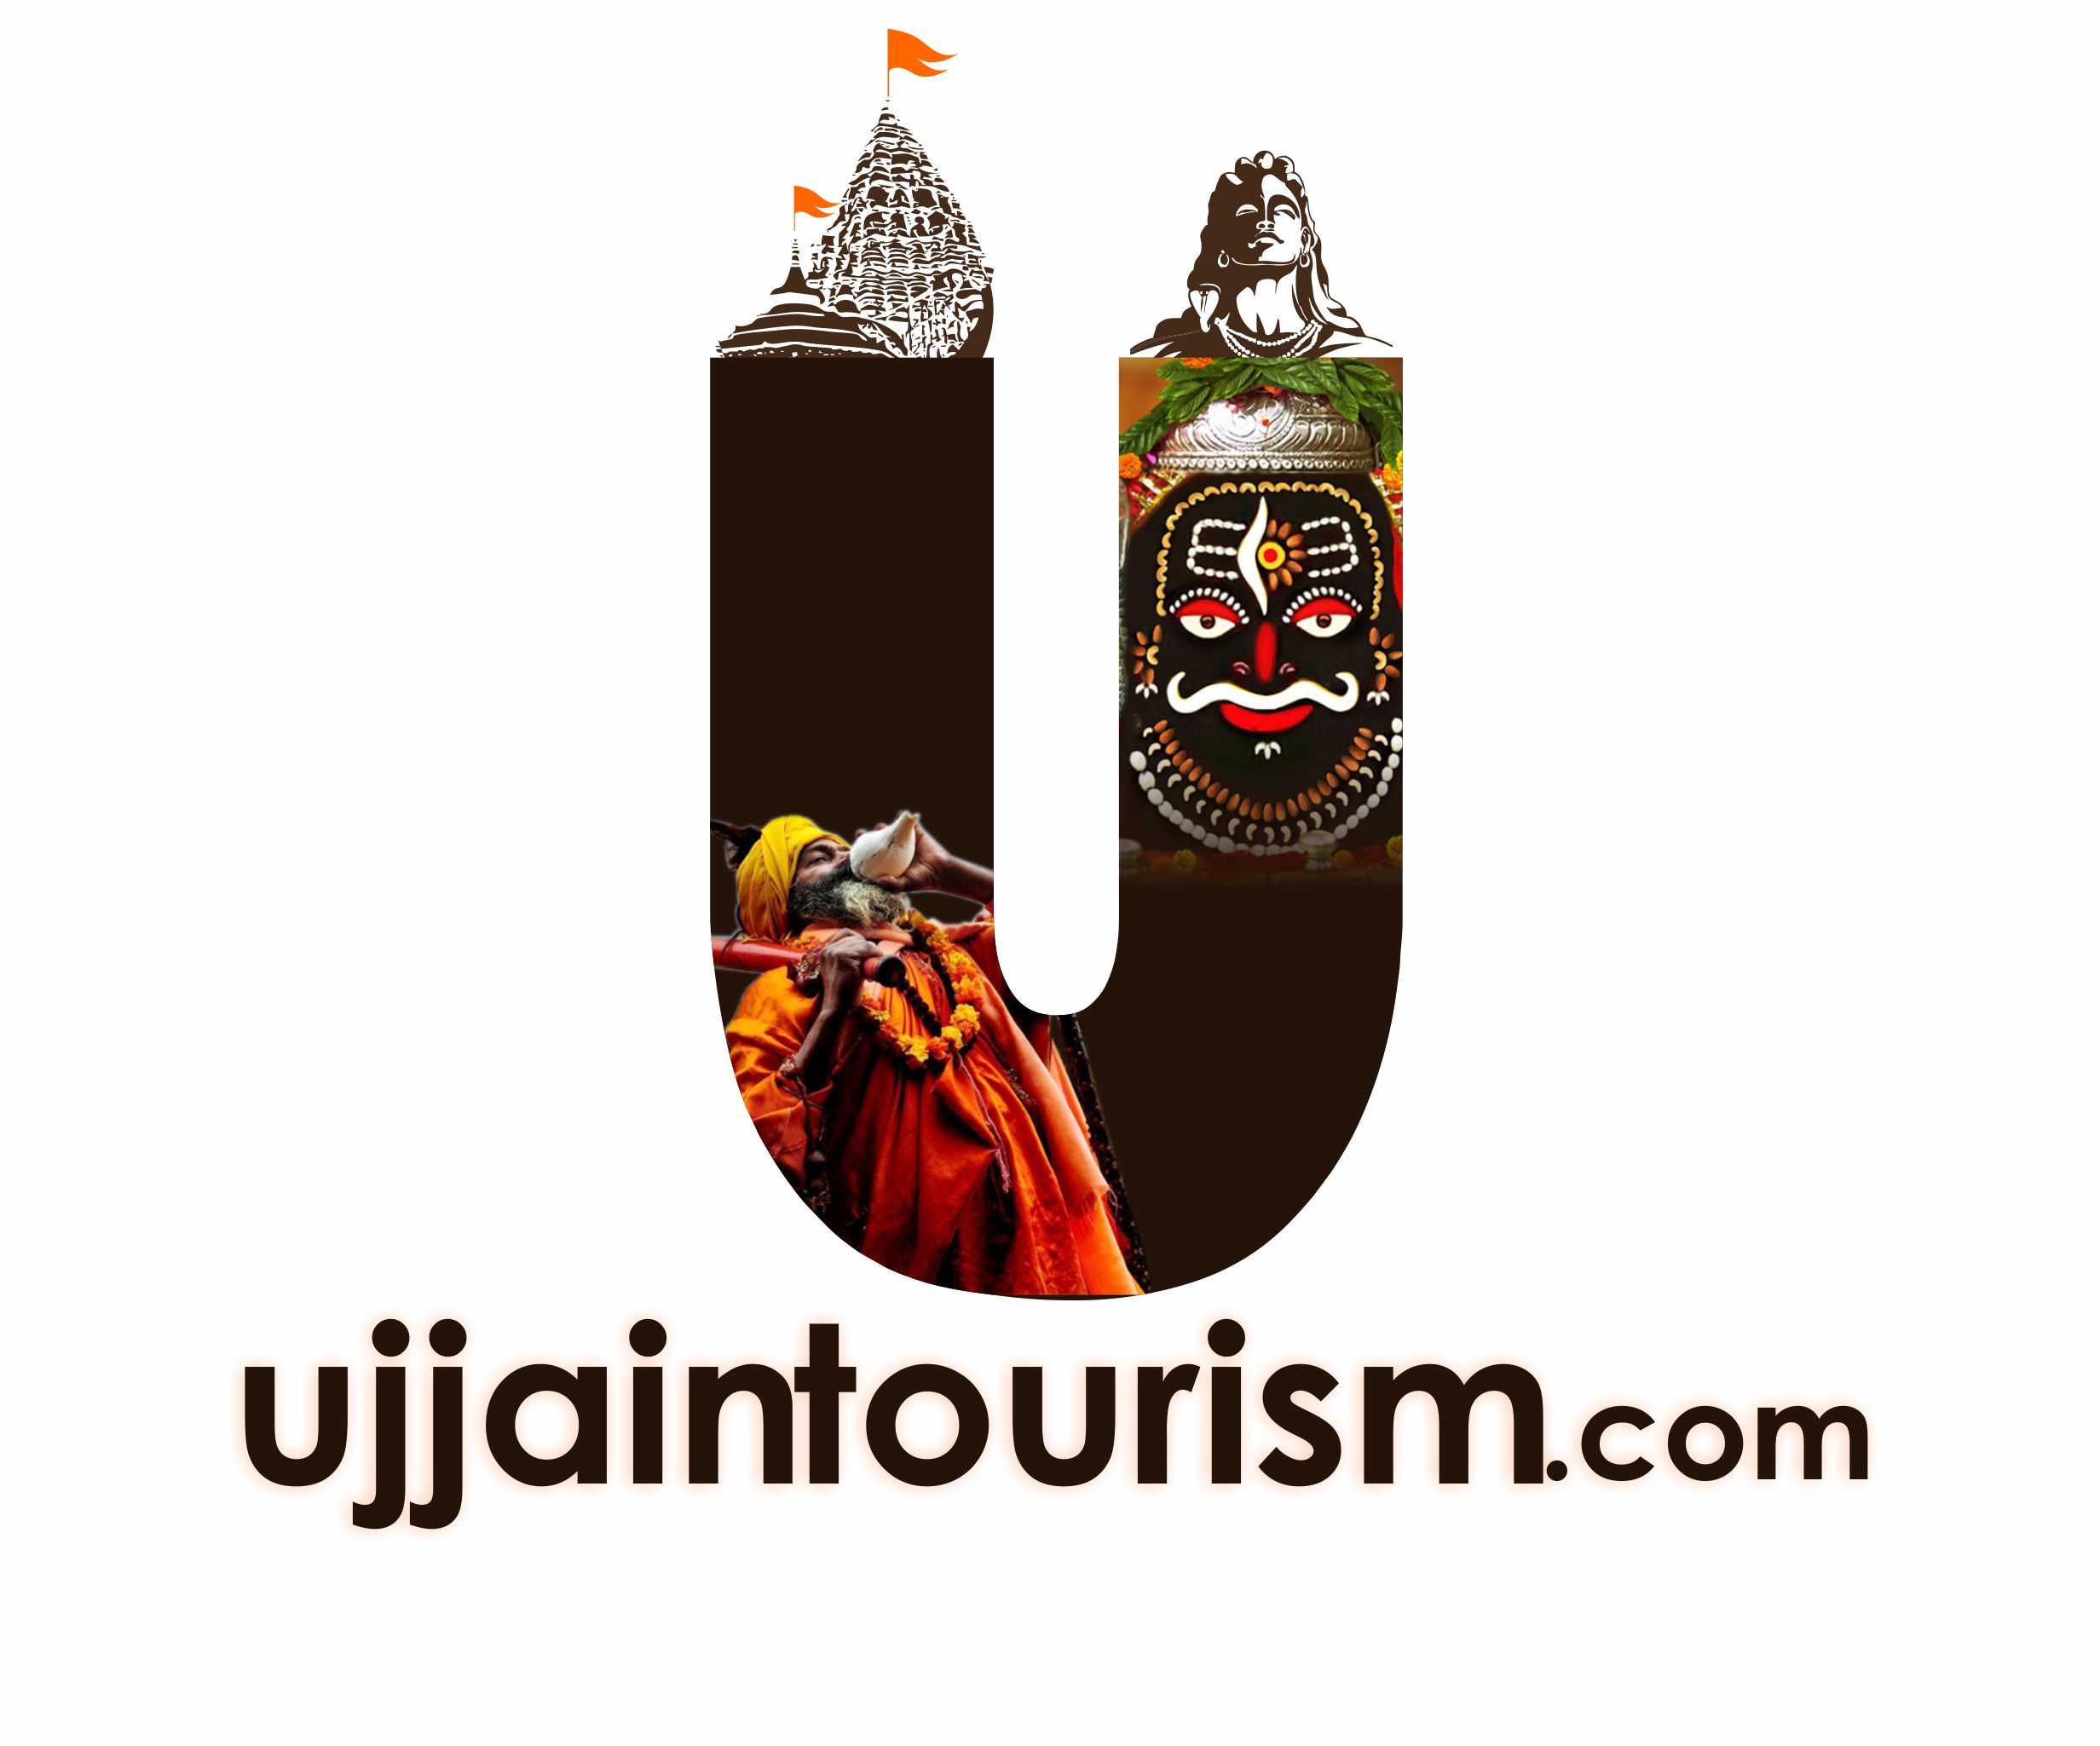 ujjain tourism development corporation